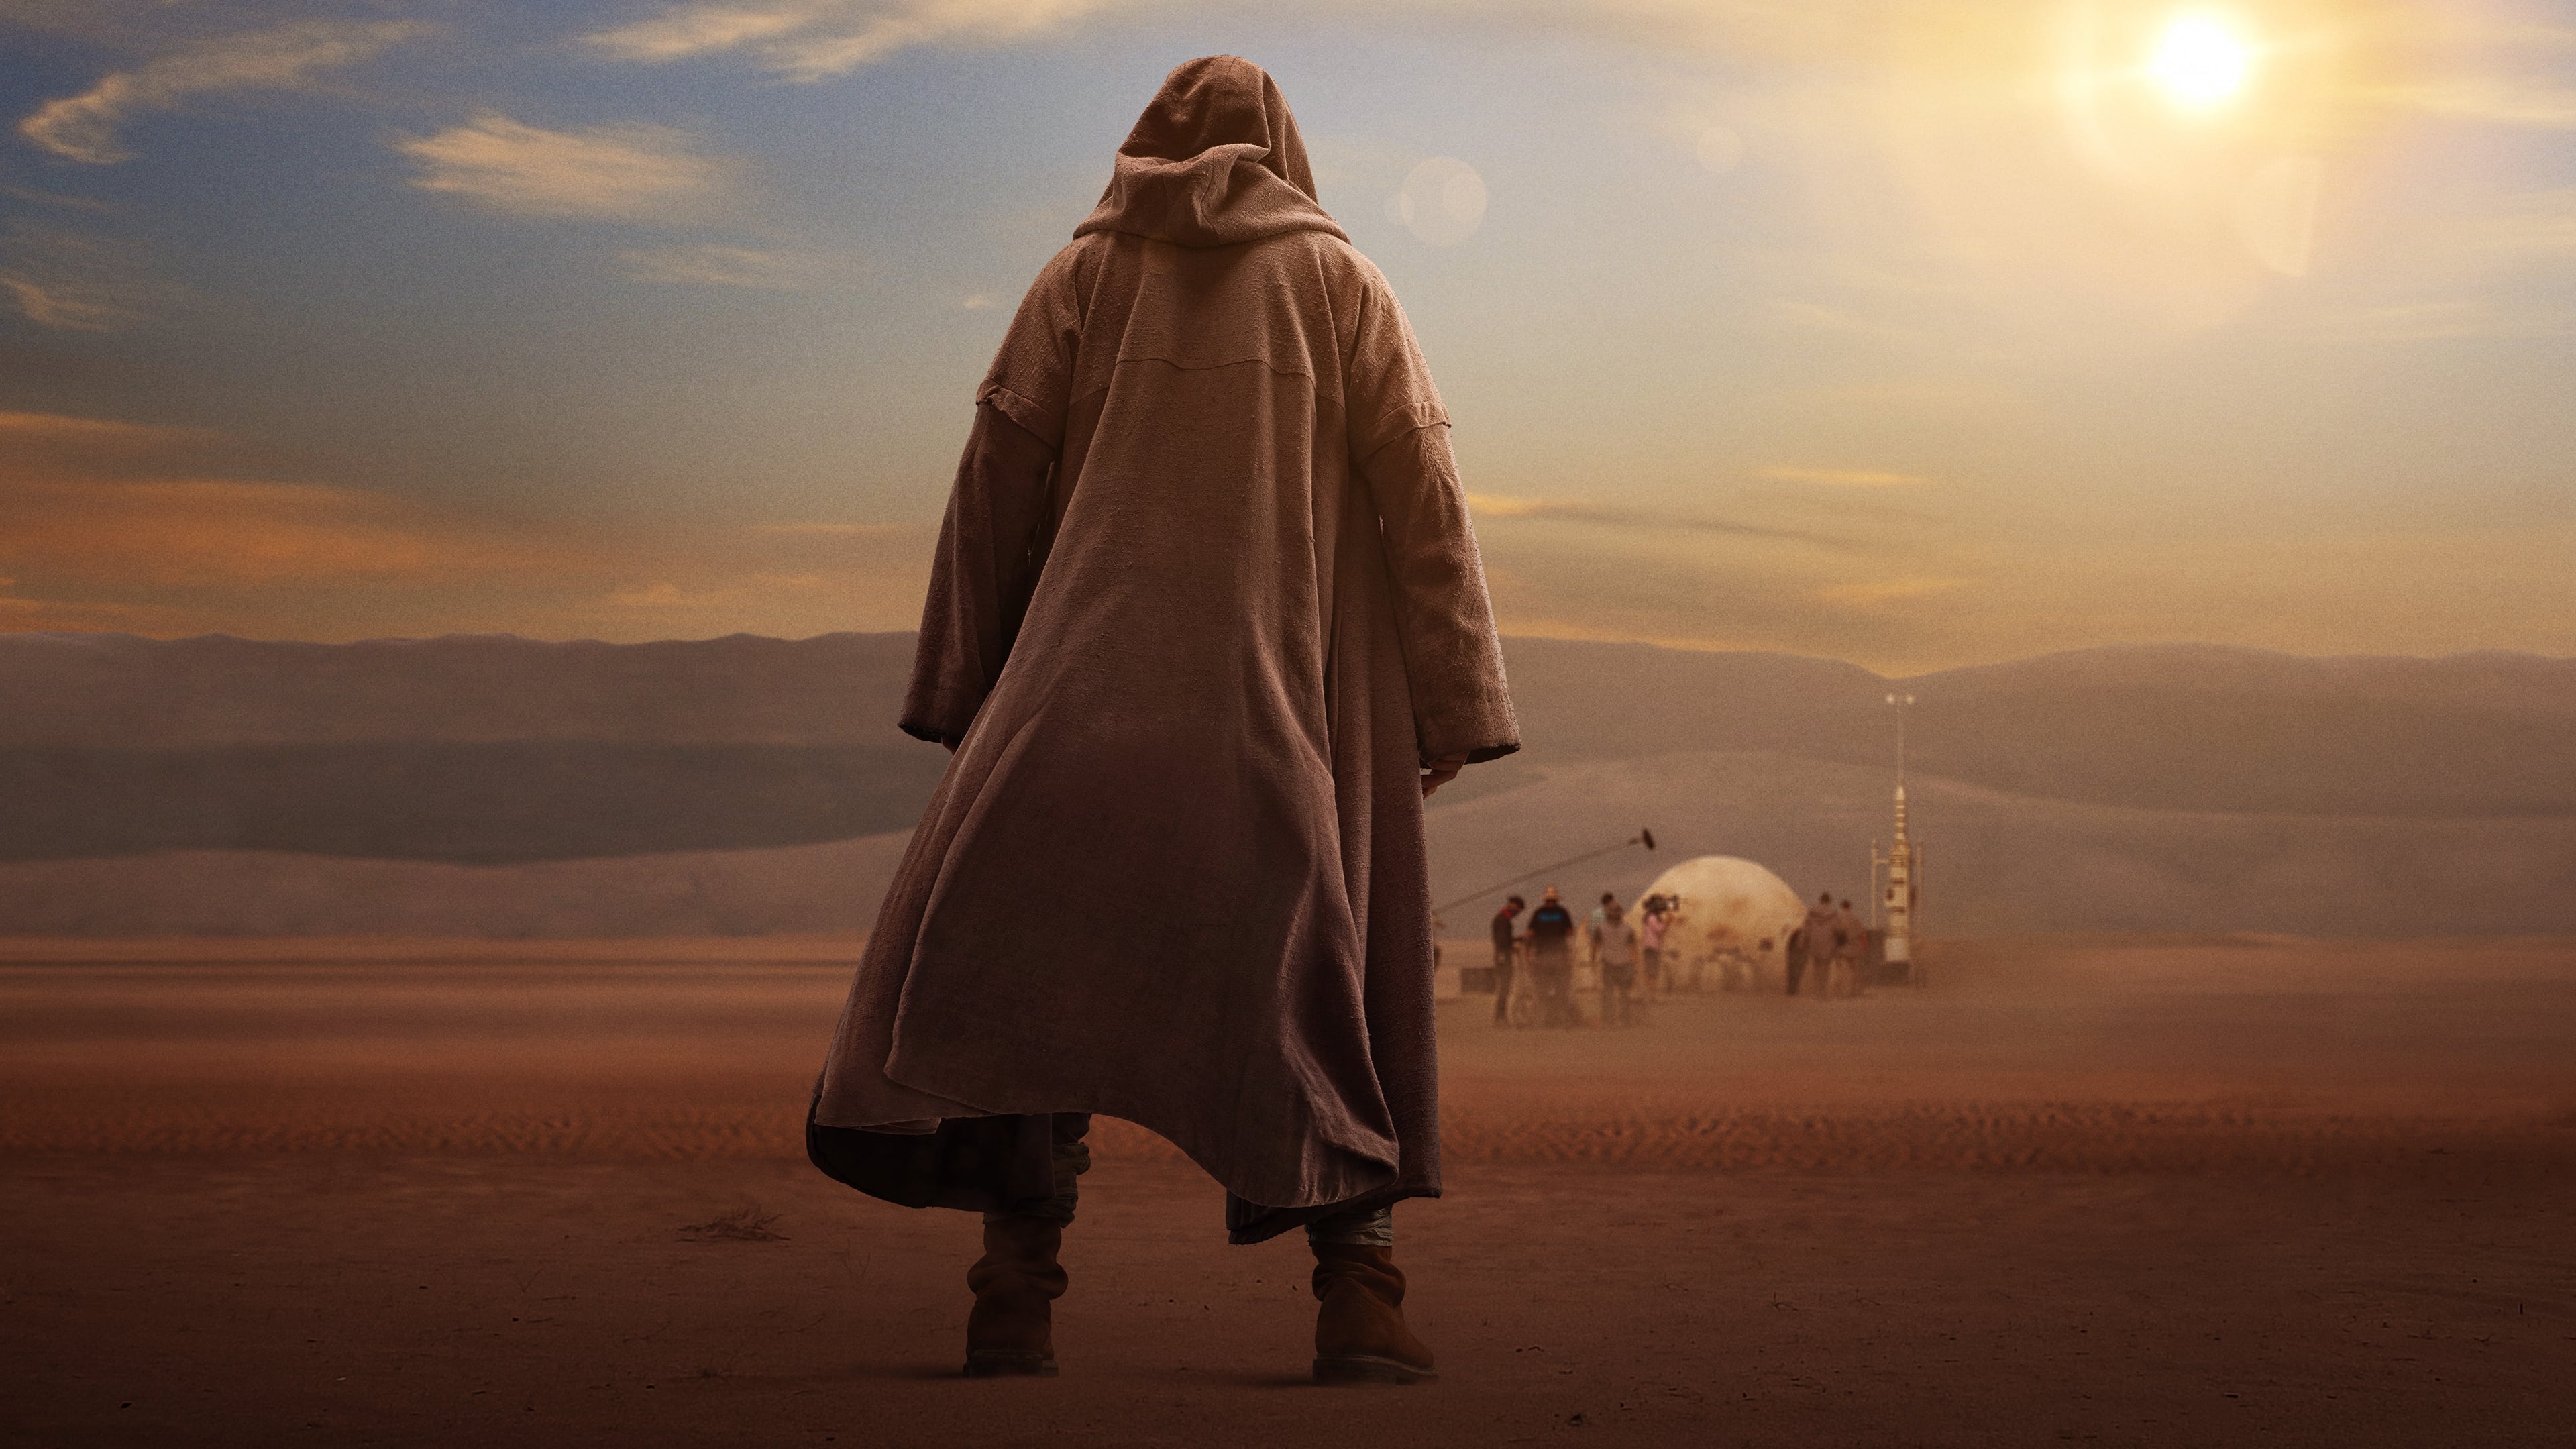 Obi-Wan Kenobi: El retorno de un jedi (2022)